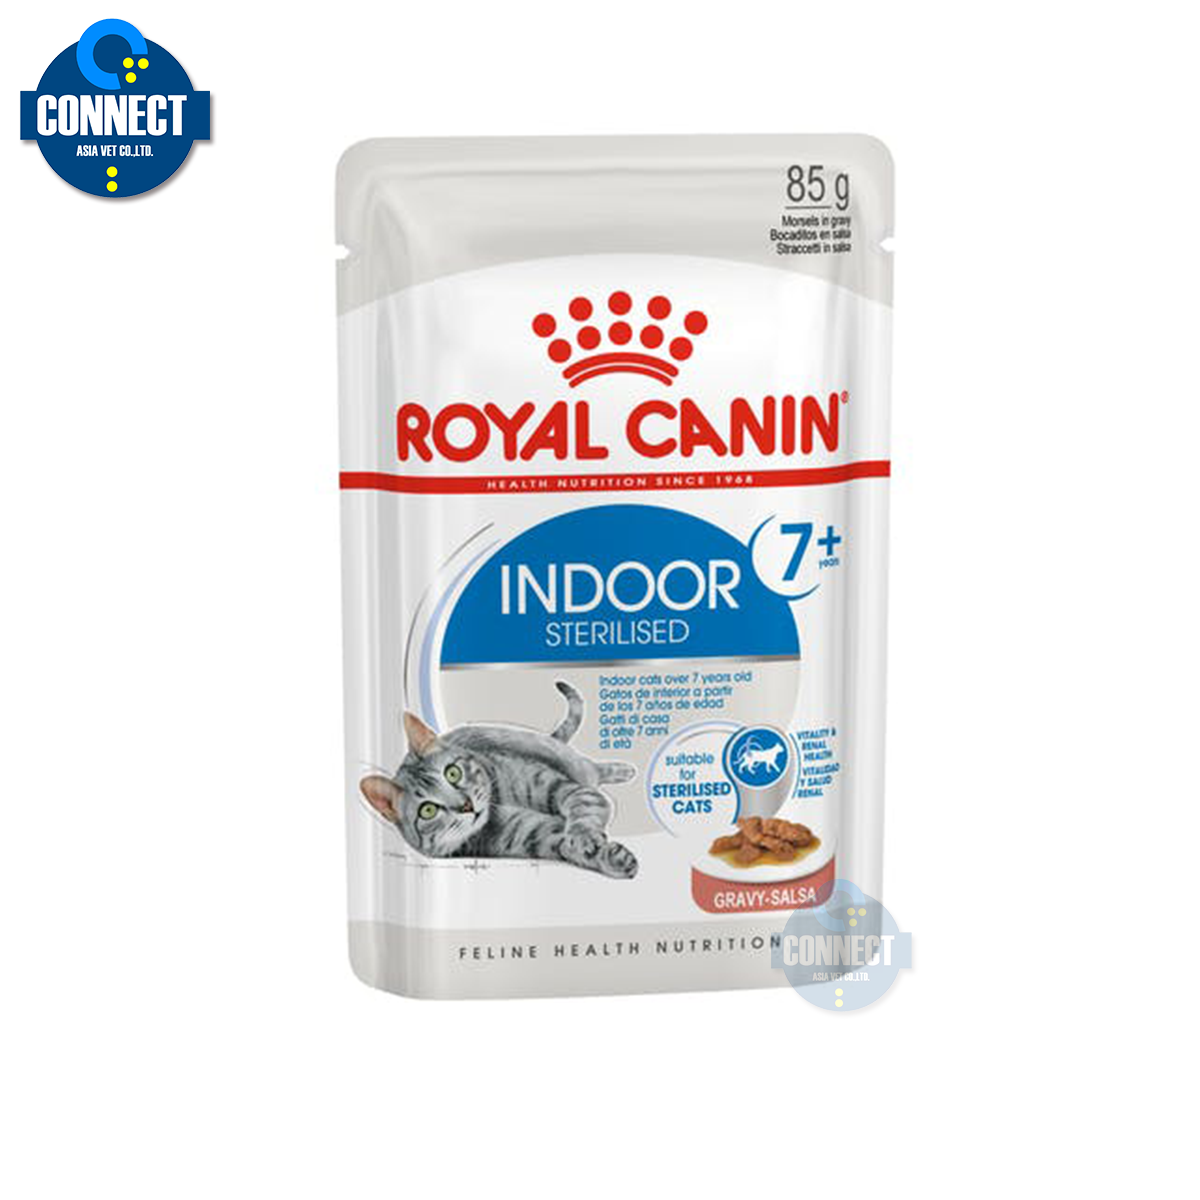 Royal Canin Indoor Sterilised 7+ Gravy ขนาด 85 กรัม จำนวน 12 ซอง.